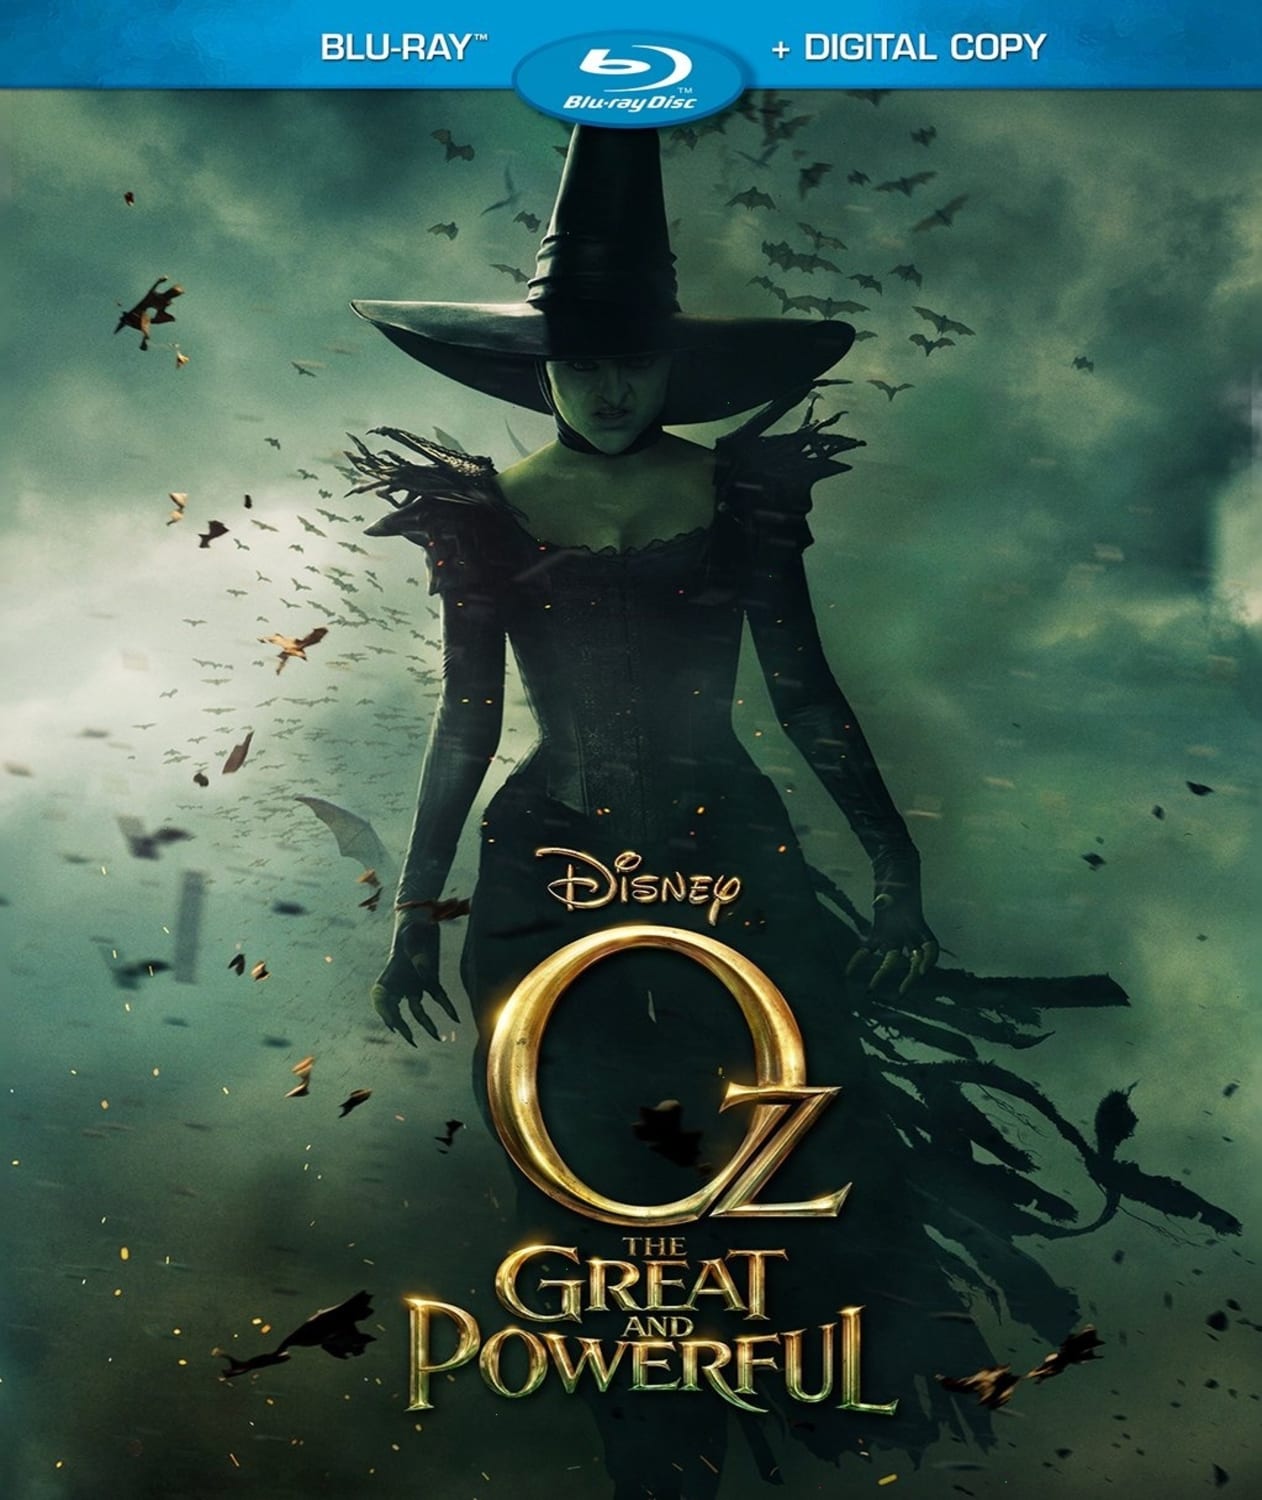 Oz, The Great and Powerful (Blu-ray / Digital Copy) on MovieShack